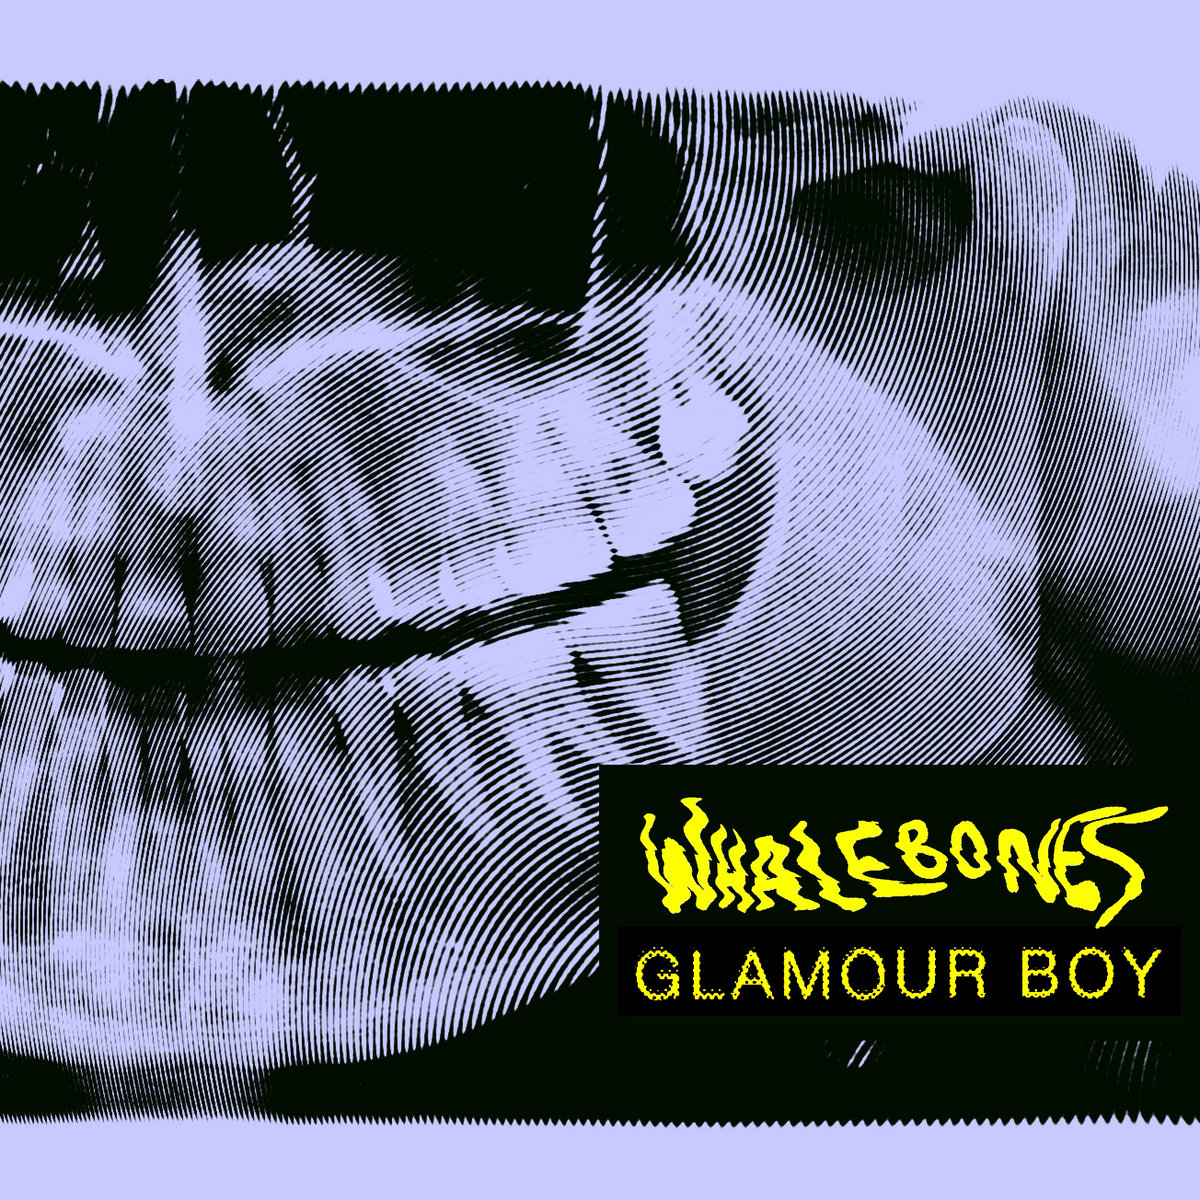 the album artwork of GLAMOUR BOY by Whalebones